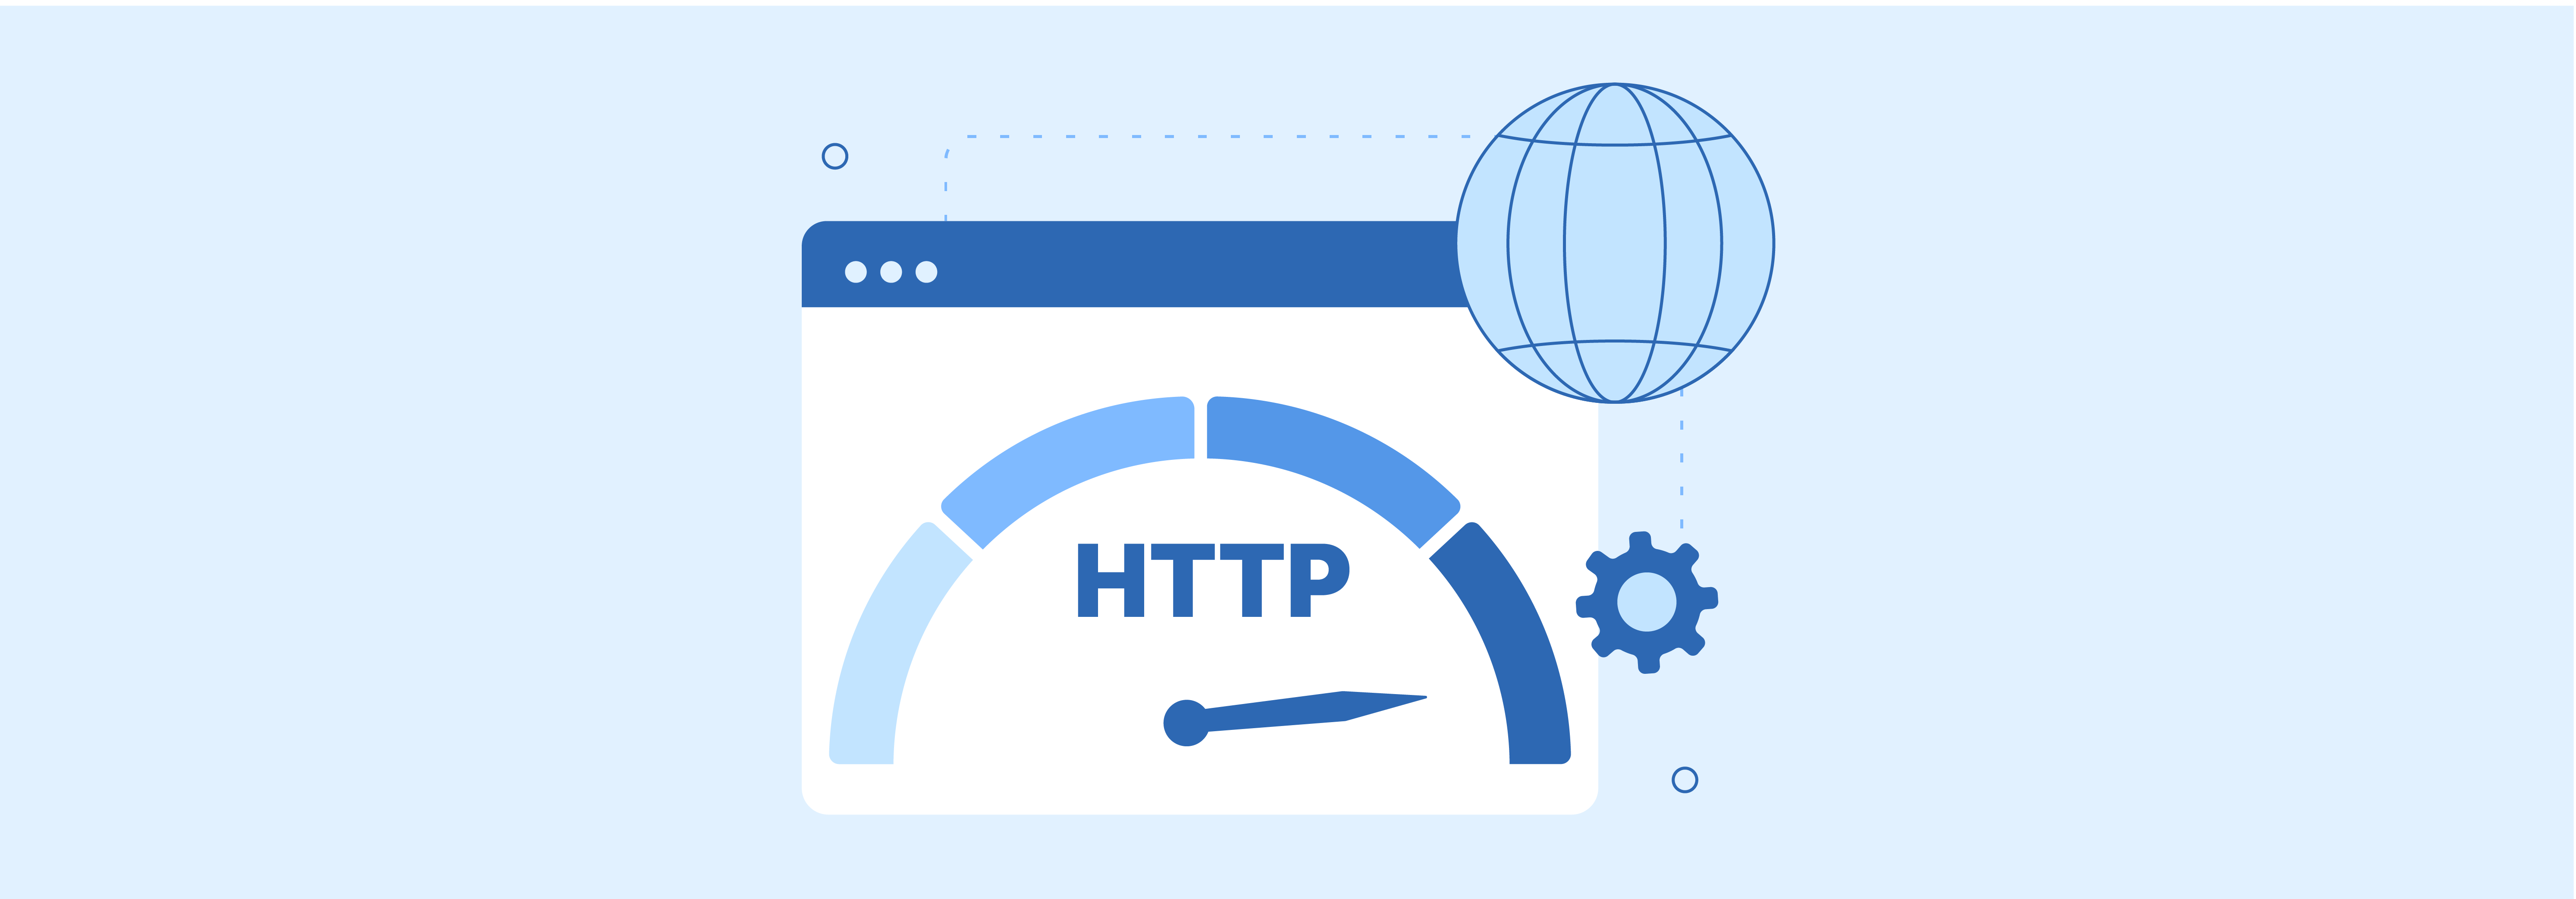 HTTP Accelerator